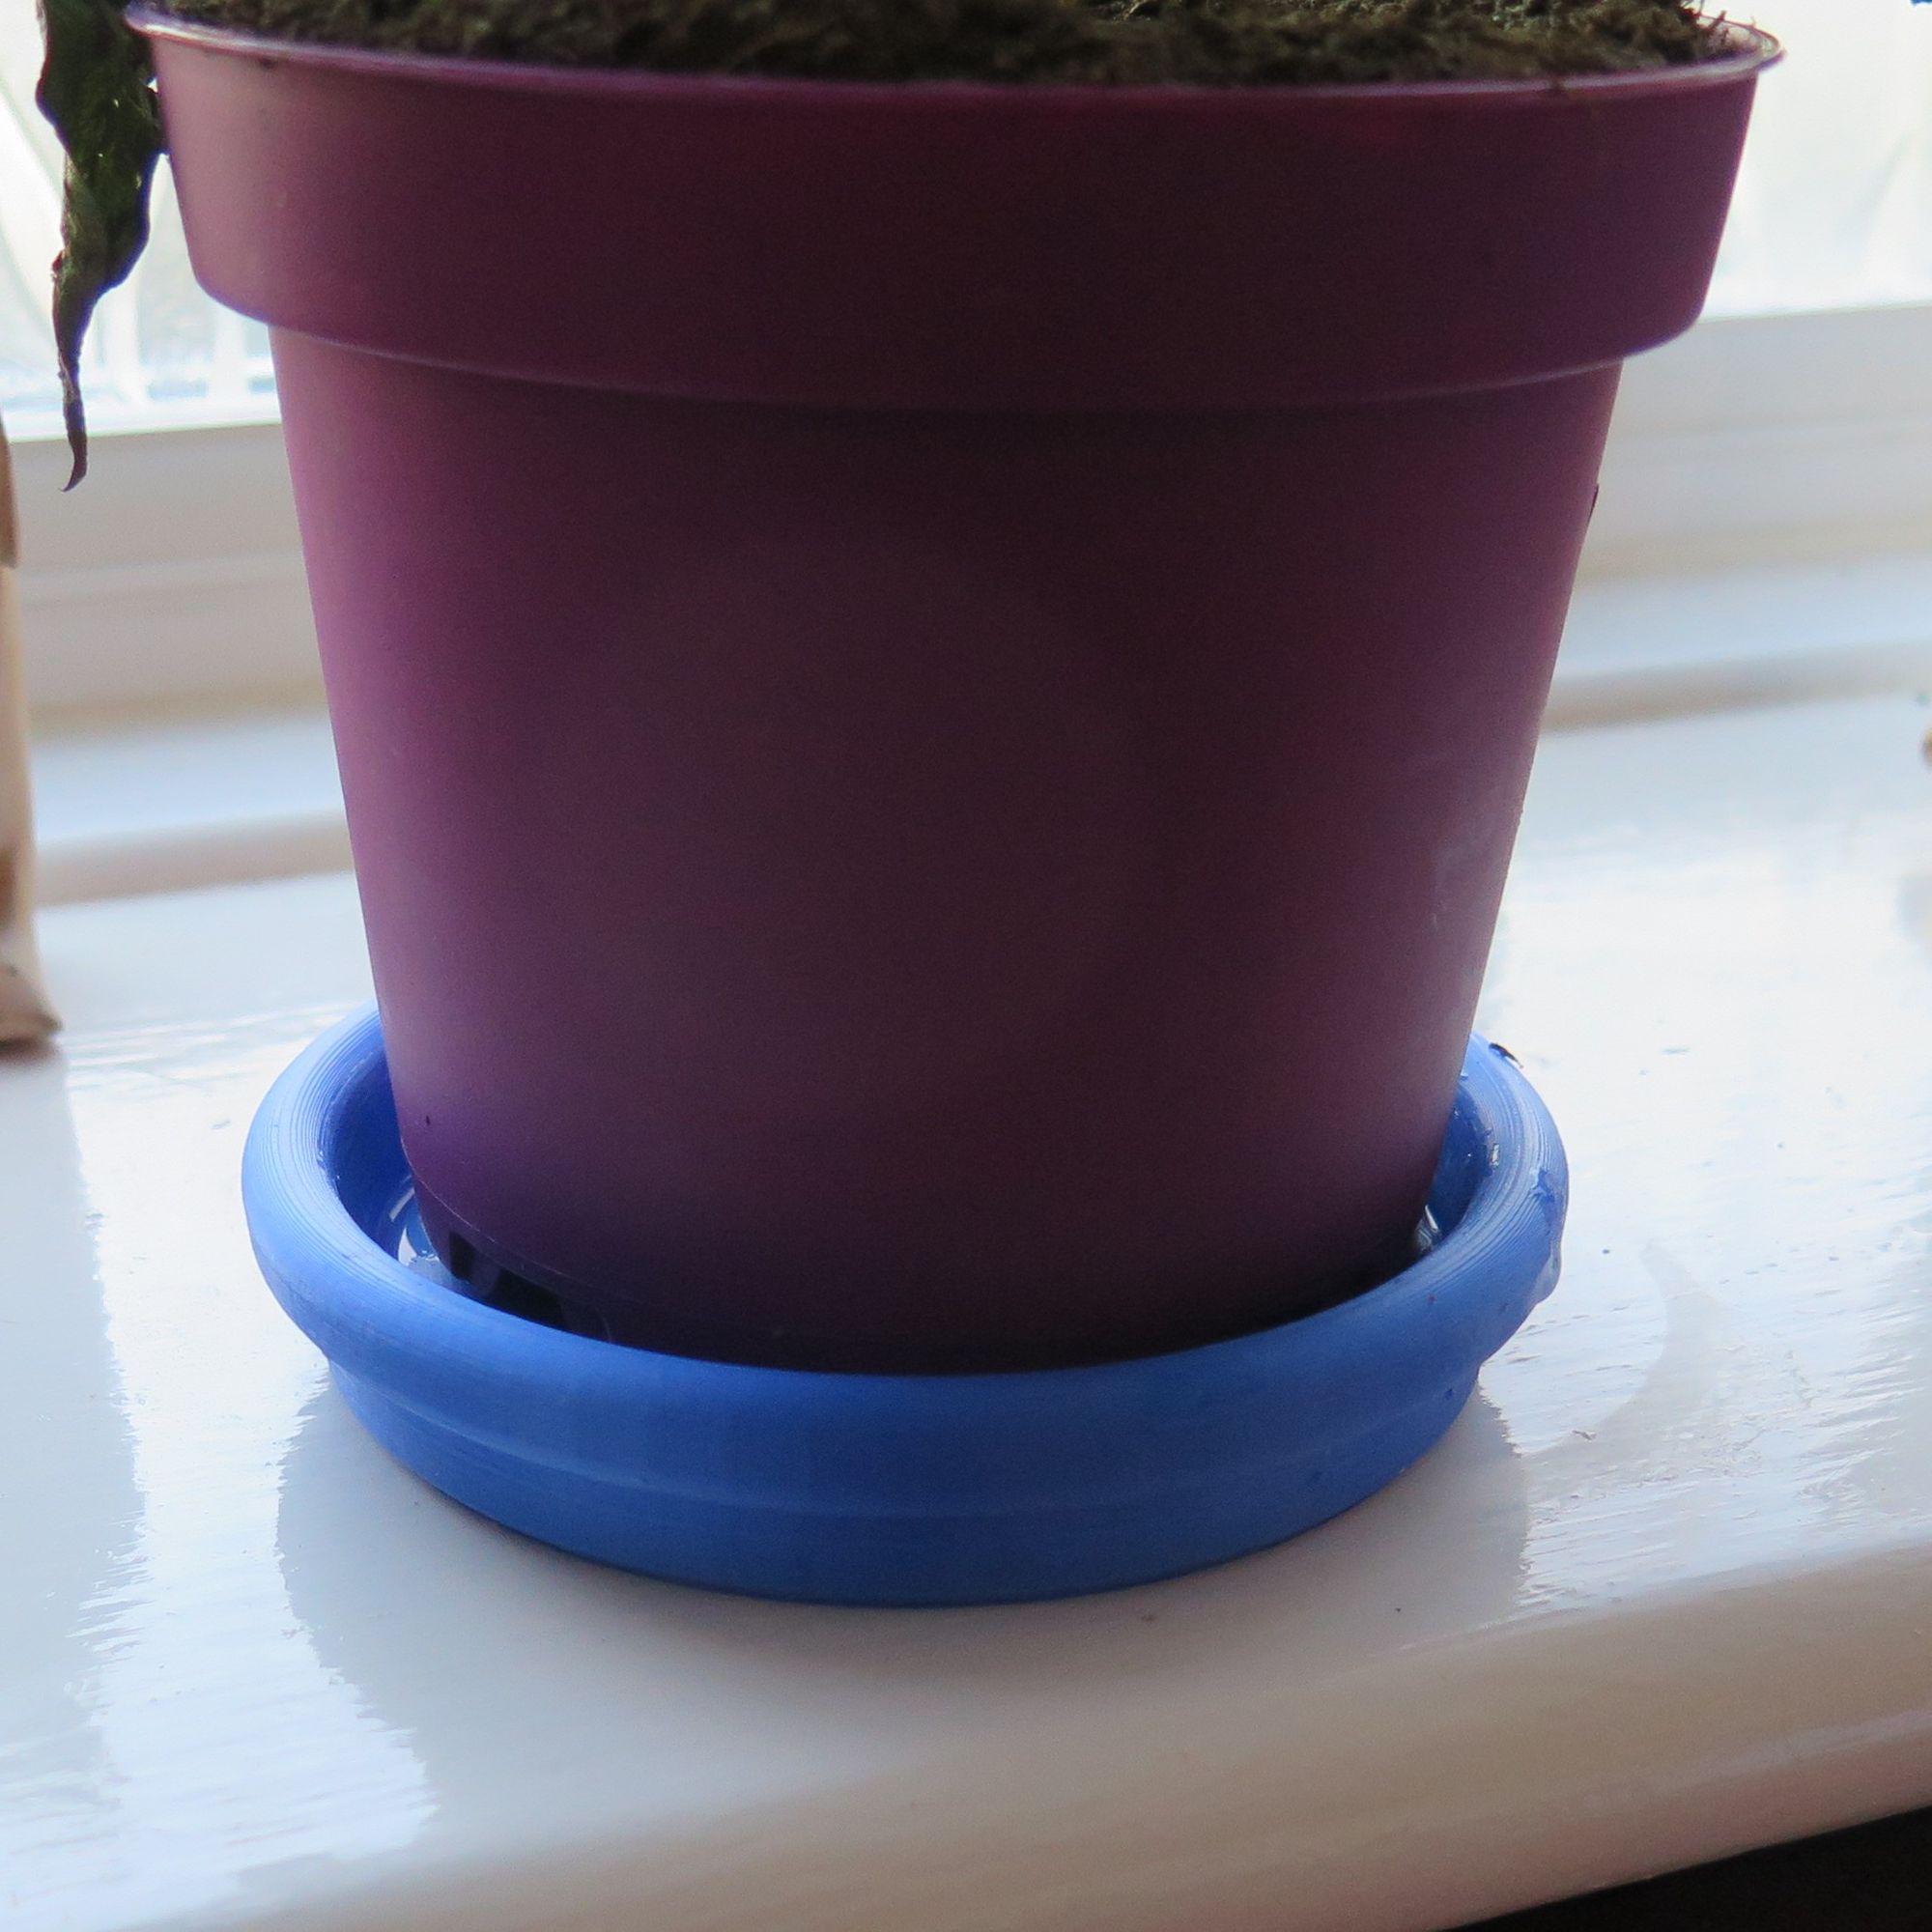 Window sill plant drip saucer